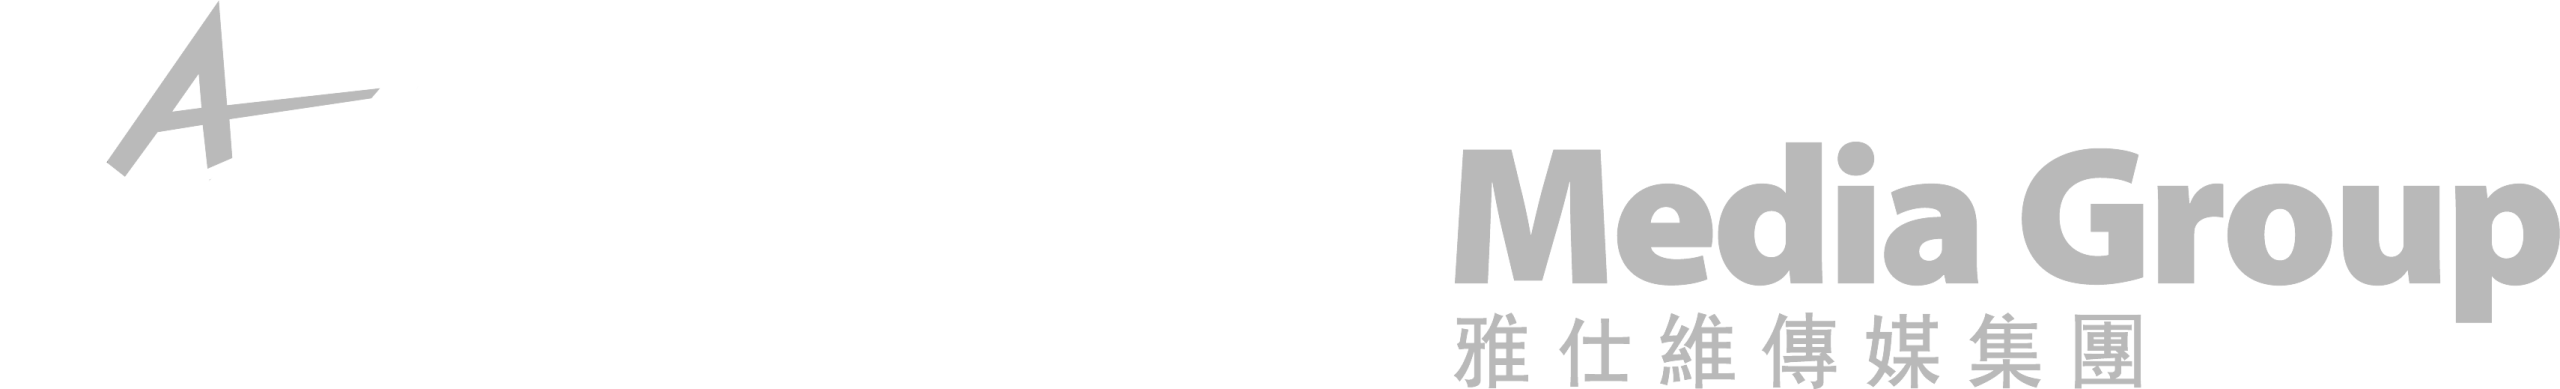 Logo Asiaray Media Group 